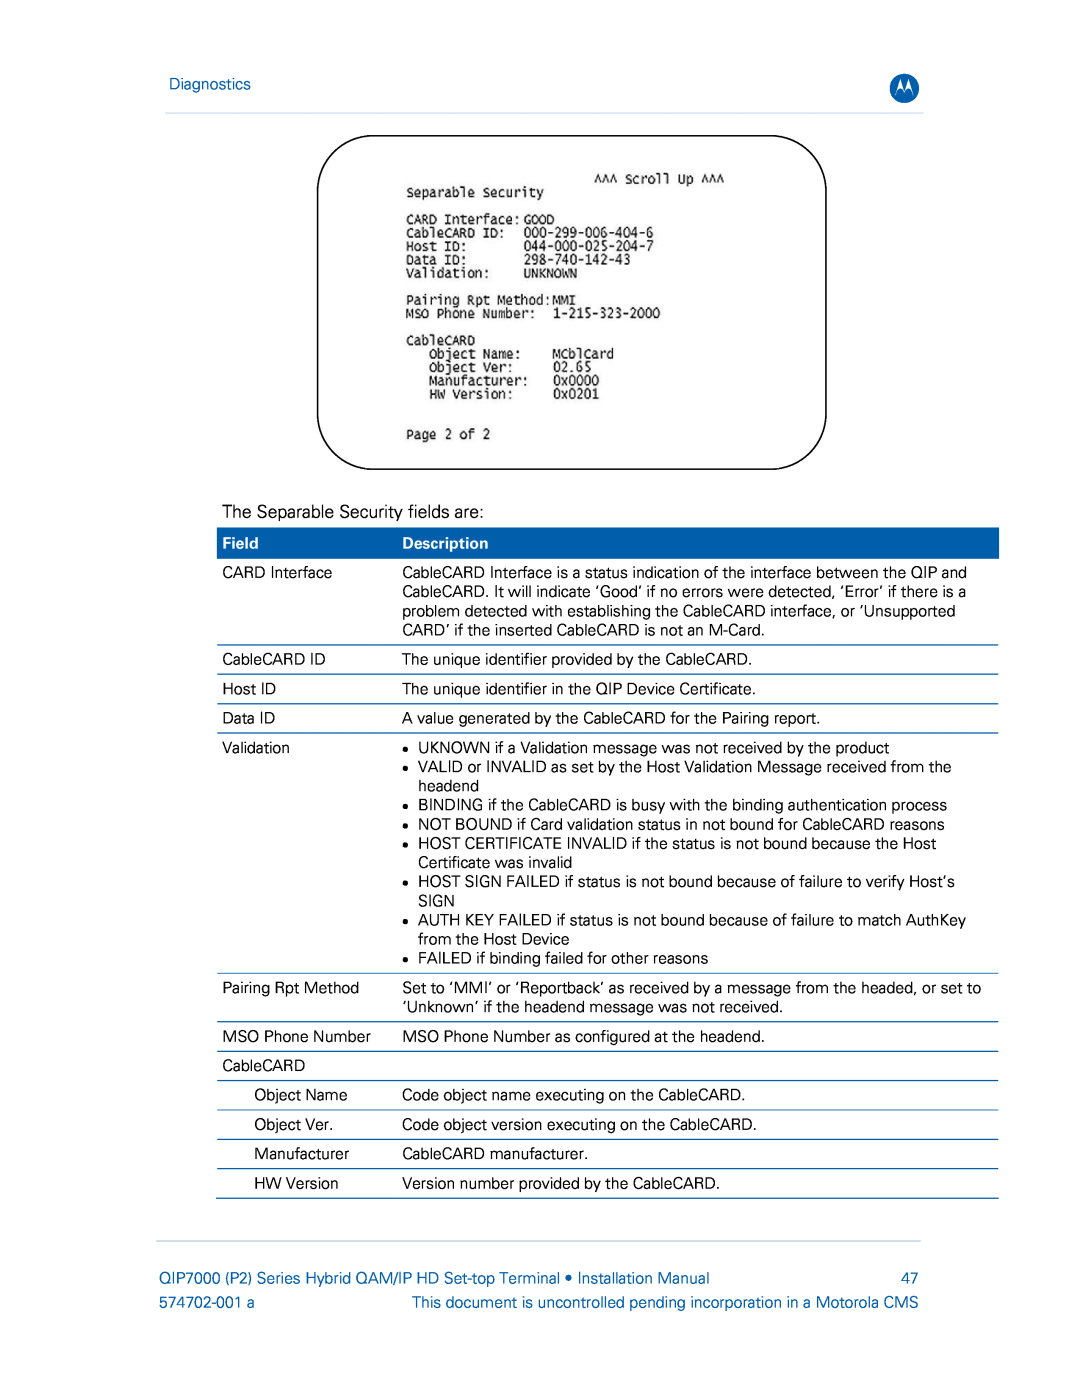 Motorola QIP7000 installation manual The Separable Security fields are, Diagnostics, Field, Description, 574702-001 a 